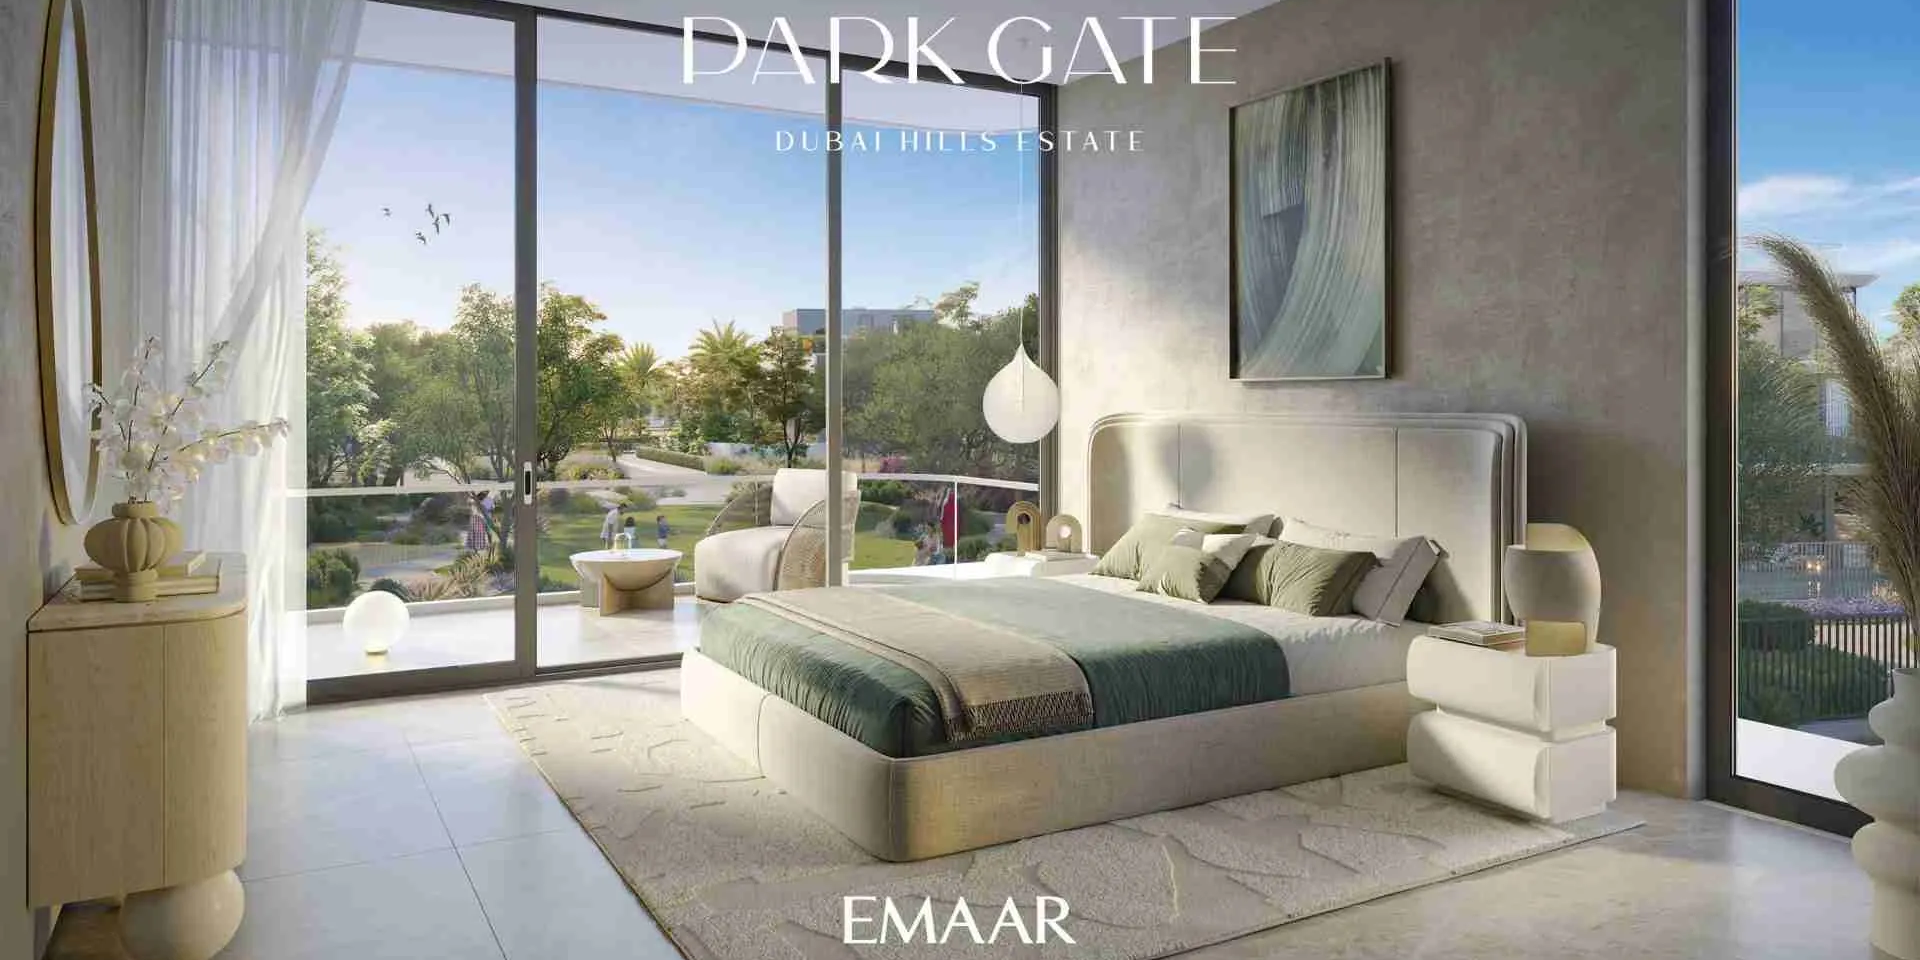 EMAAR-PARK-GATE-DUBAI-HILLS